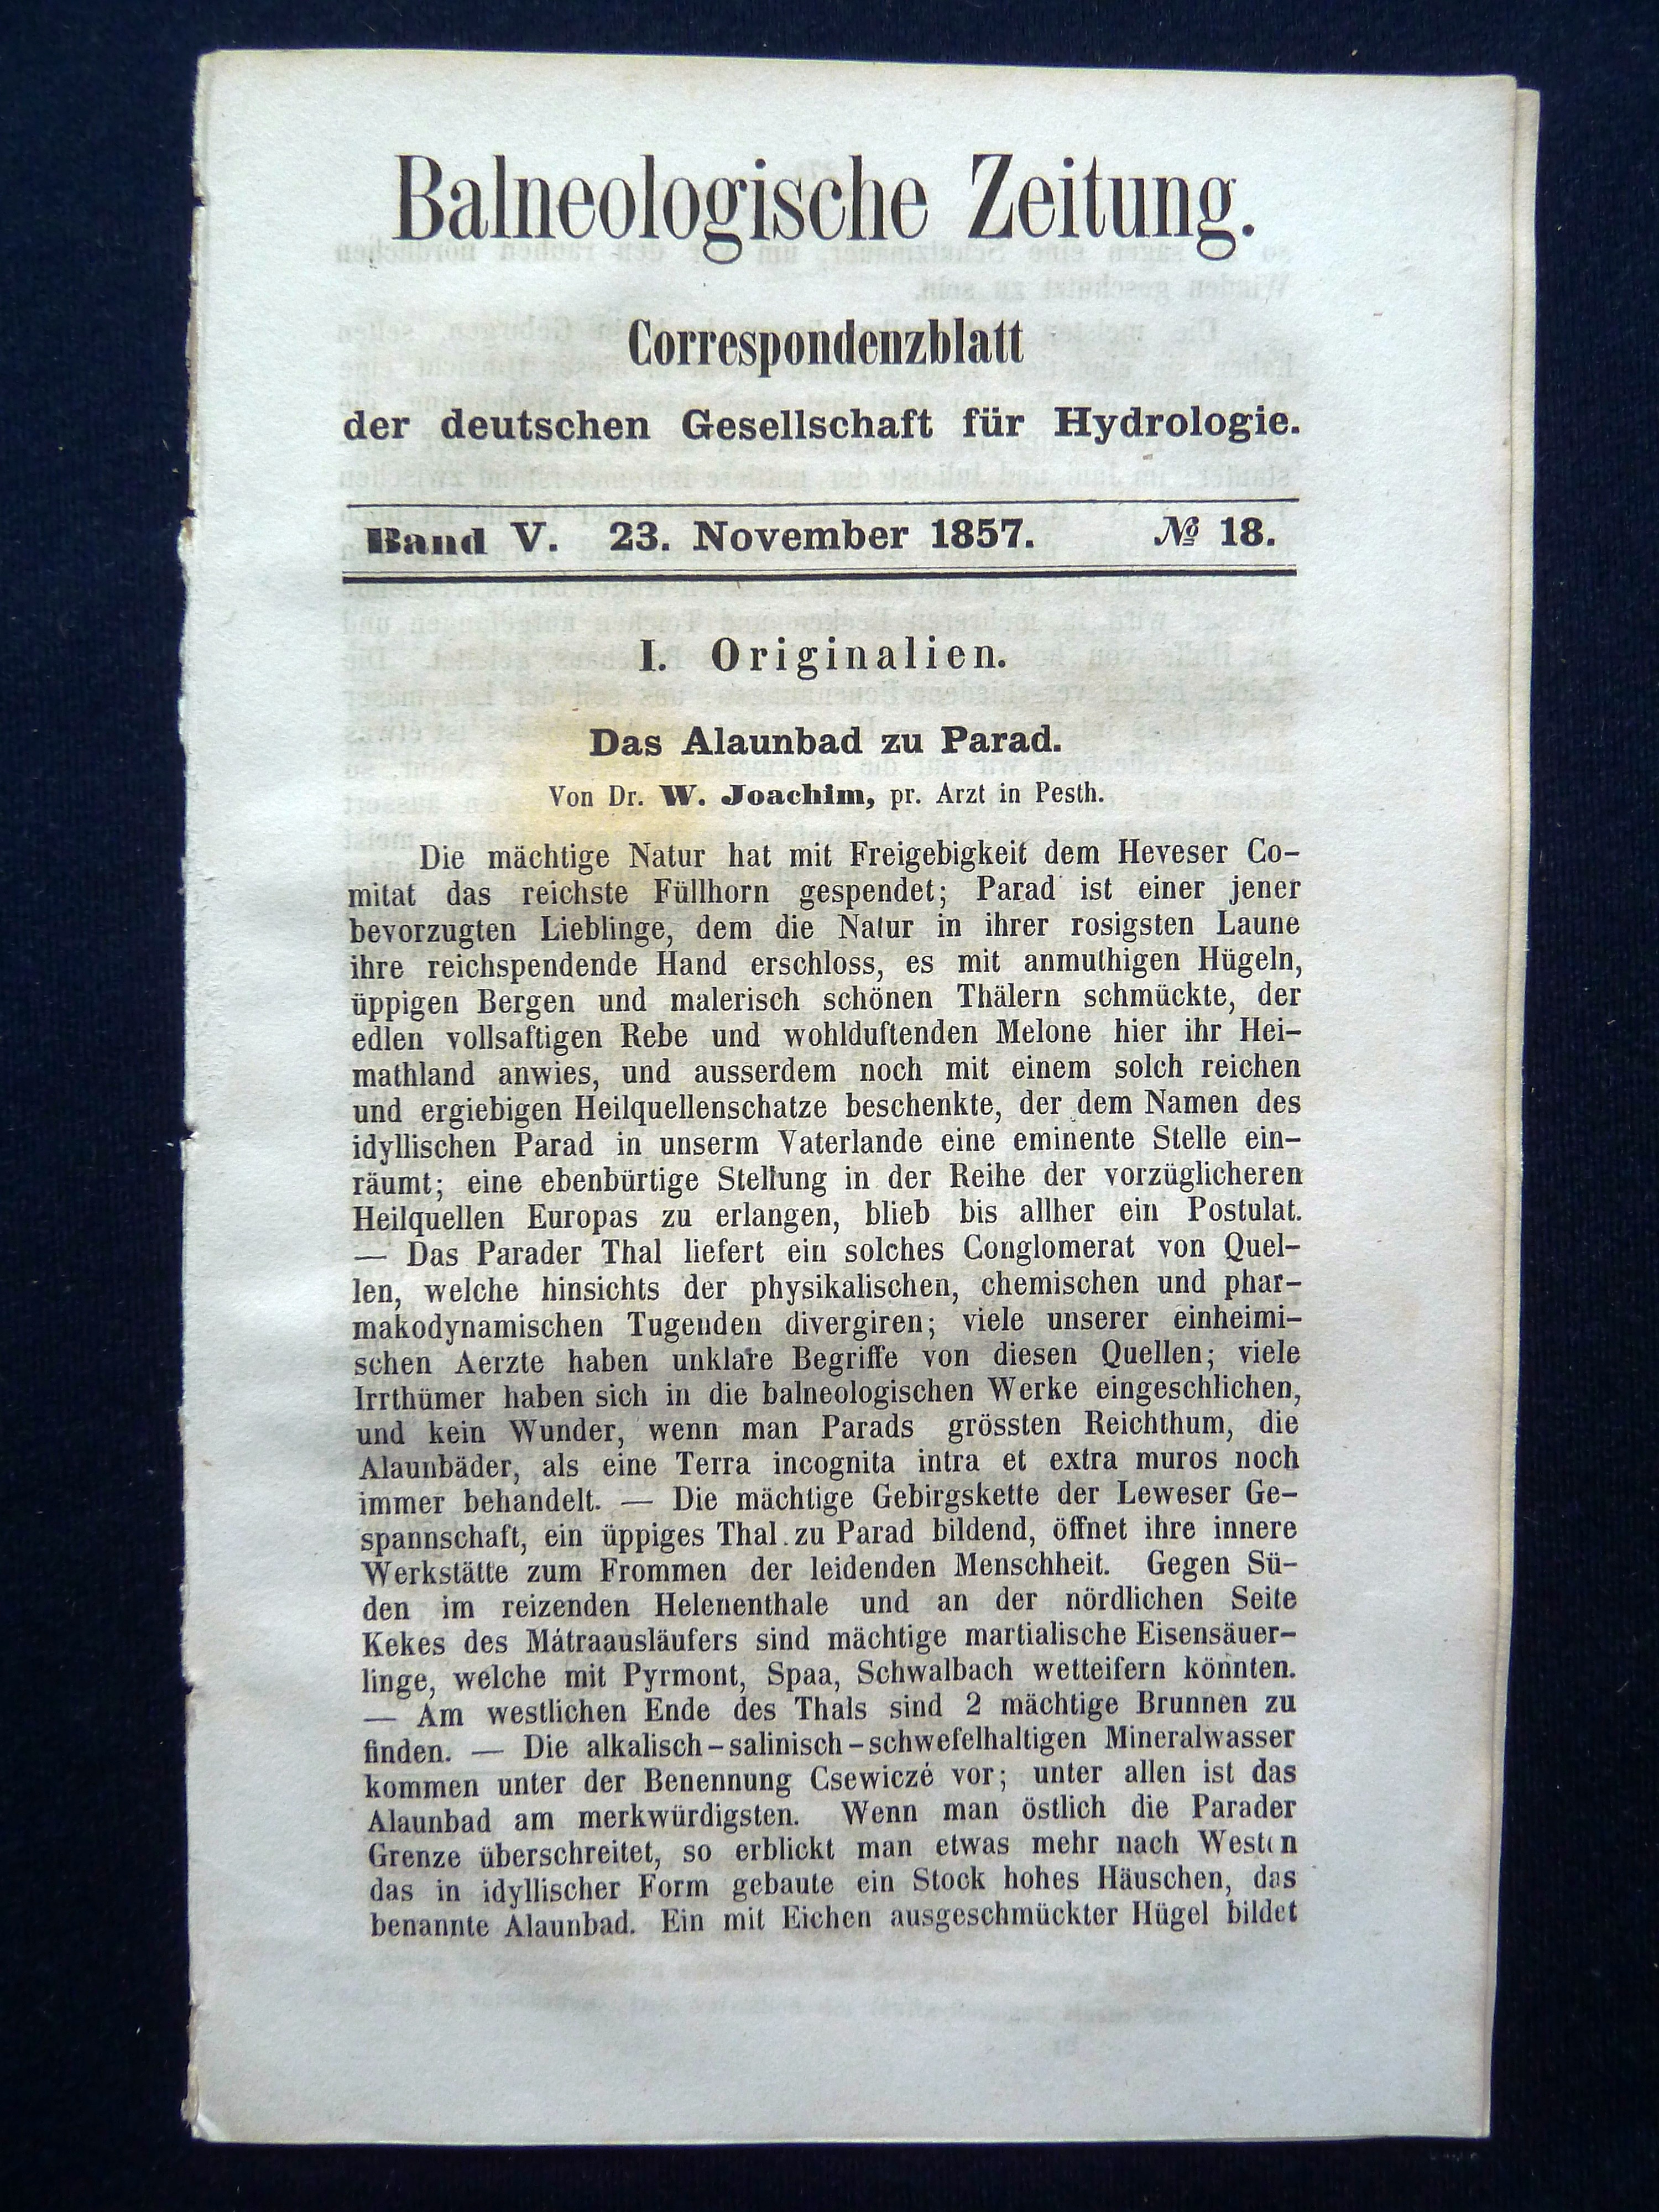 Zeritung; "Balneologische Zeitung", Correspondenzblatt der deutschen Gesellschaft für Hydrologie; 23.November 1857 (Stadtmuseum Bad Dürkheim, Museumsgesellschaft Bad Dürkheim e.V. CC BY-NC-SA)